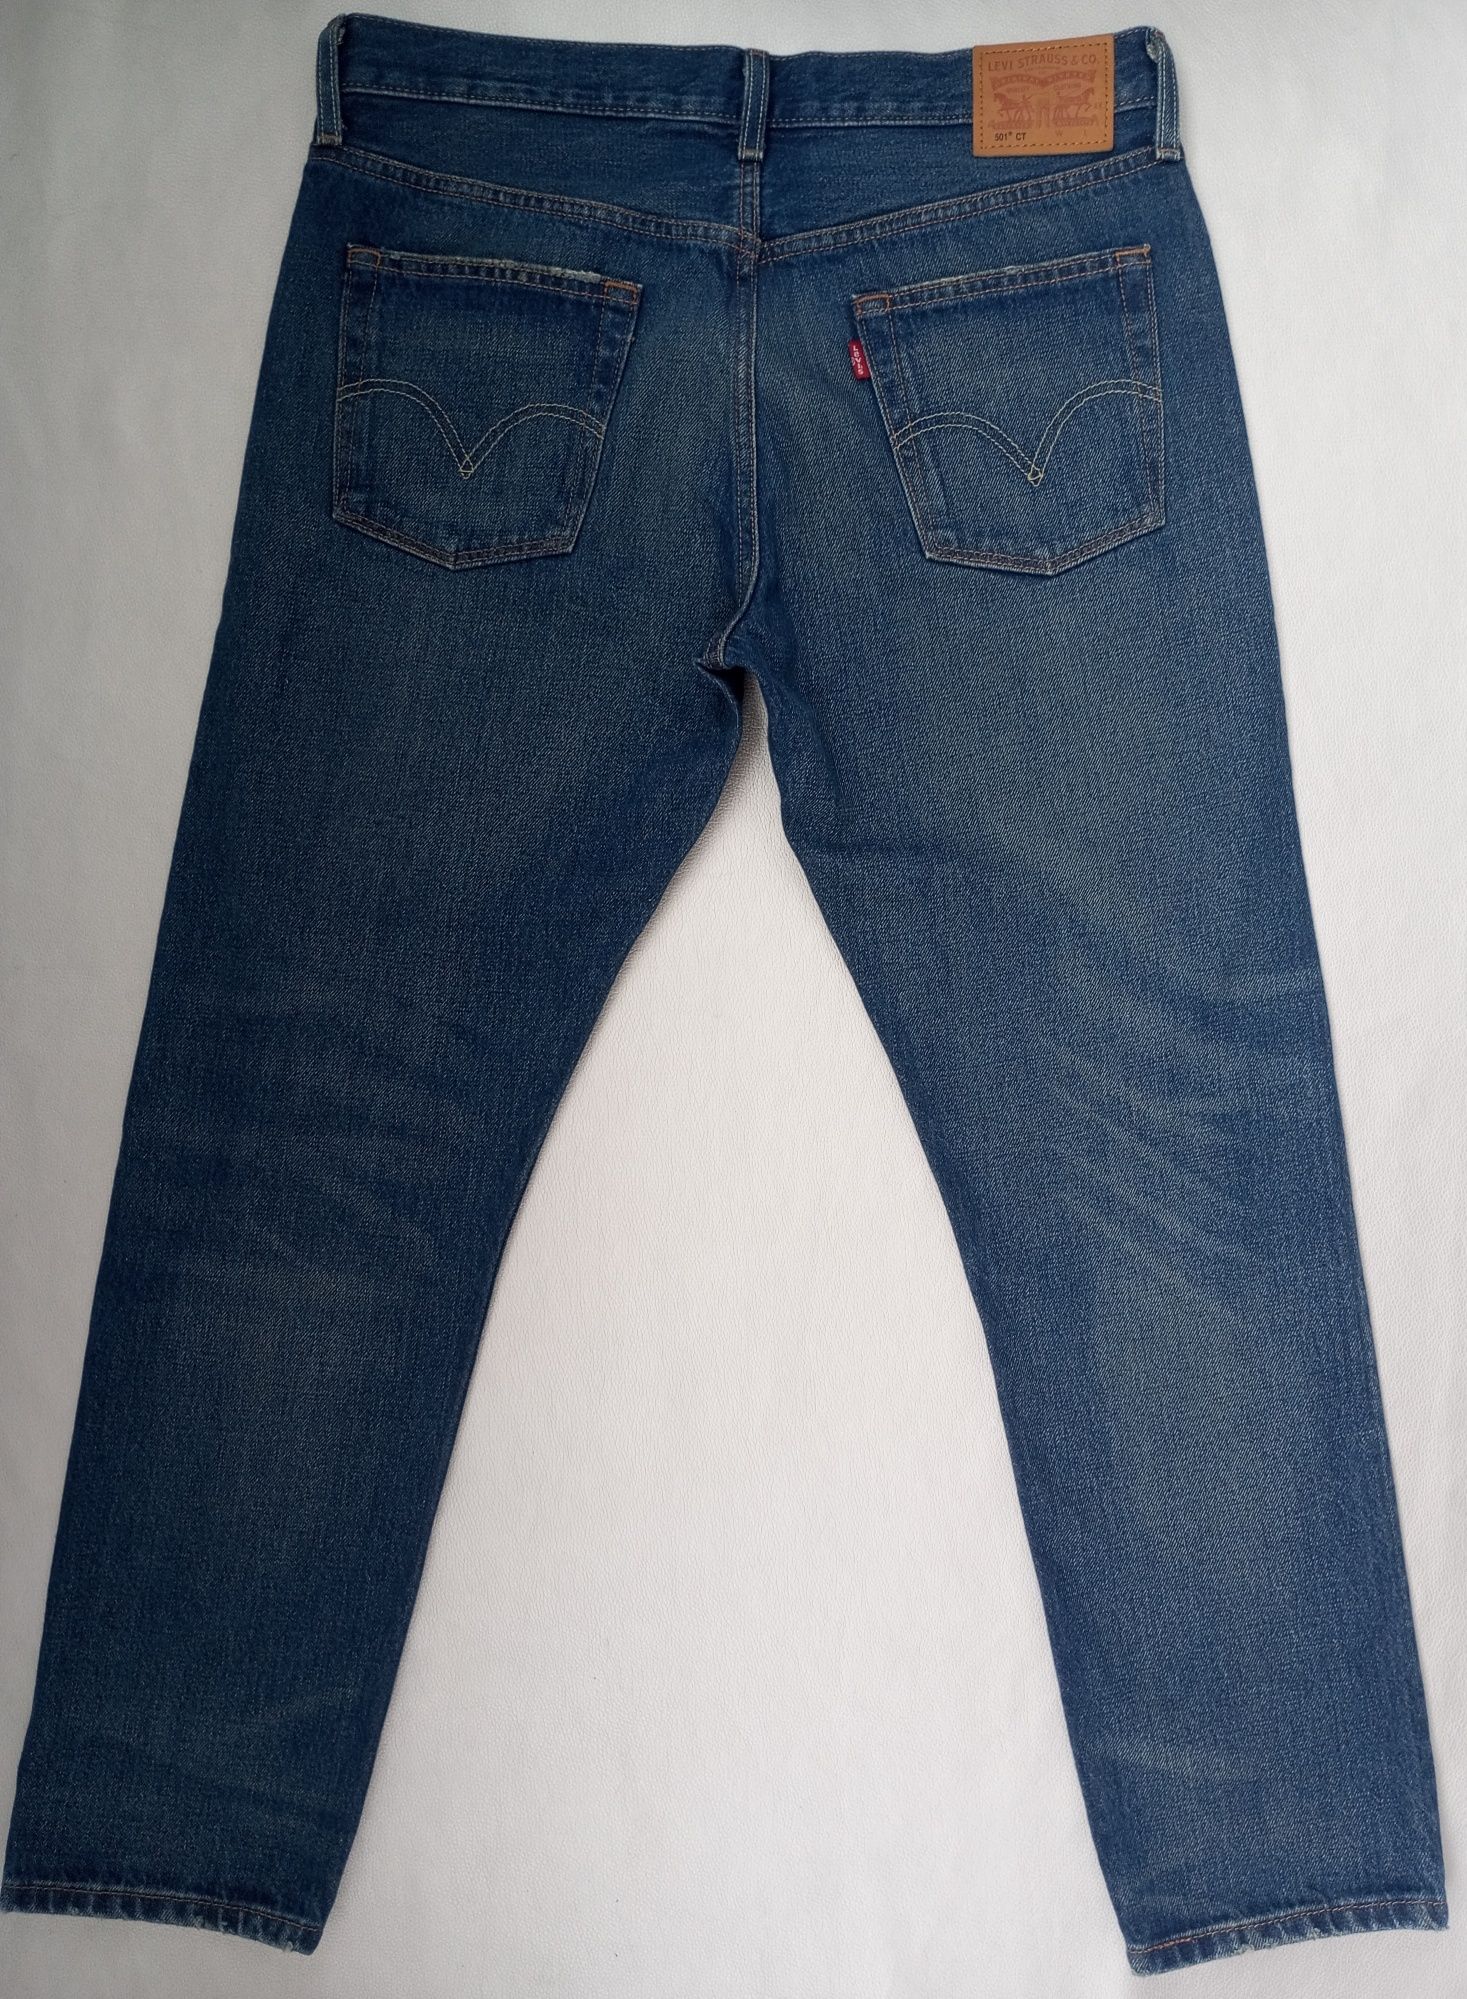 Жіночі джинси 501  28/32 . Original 100% cotton